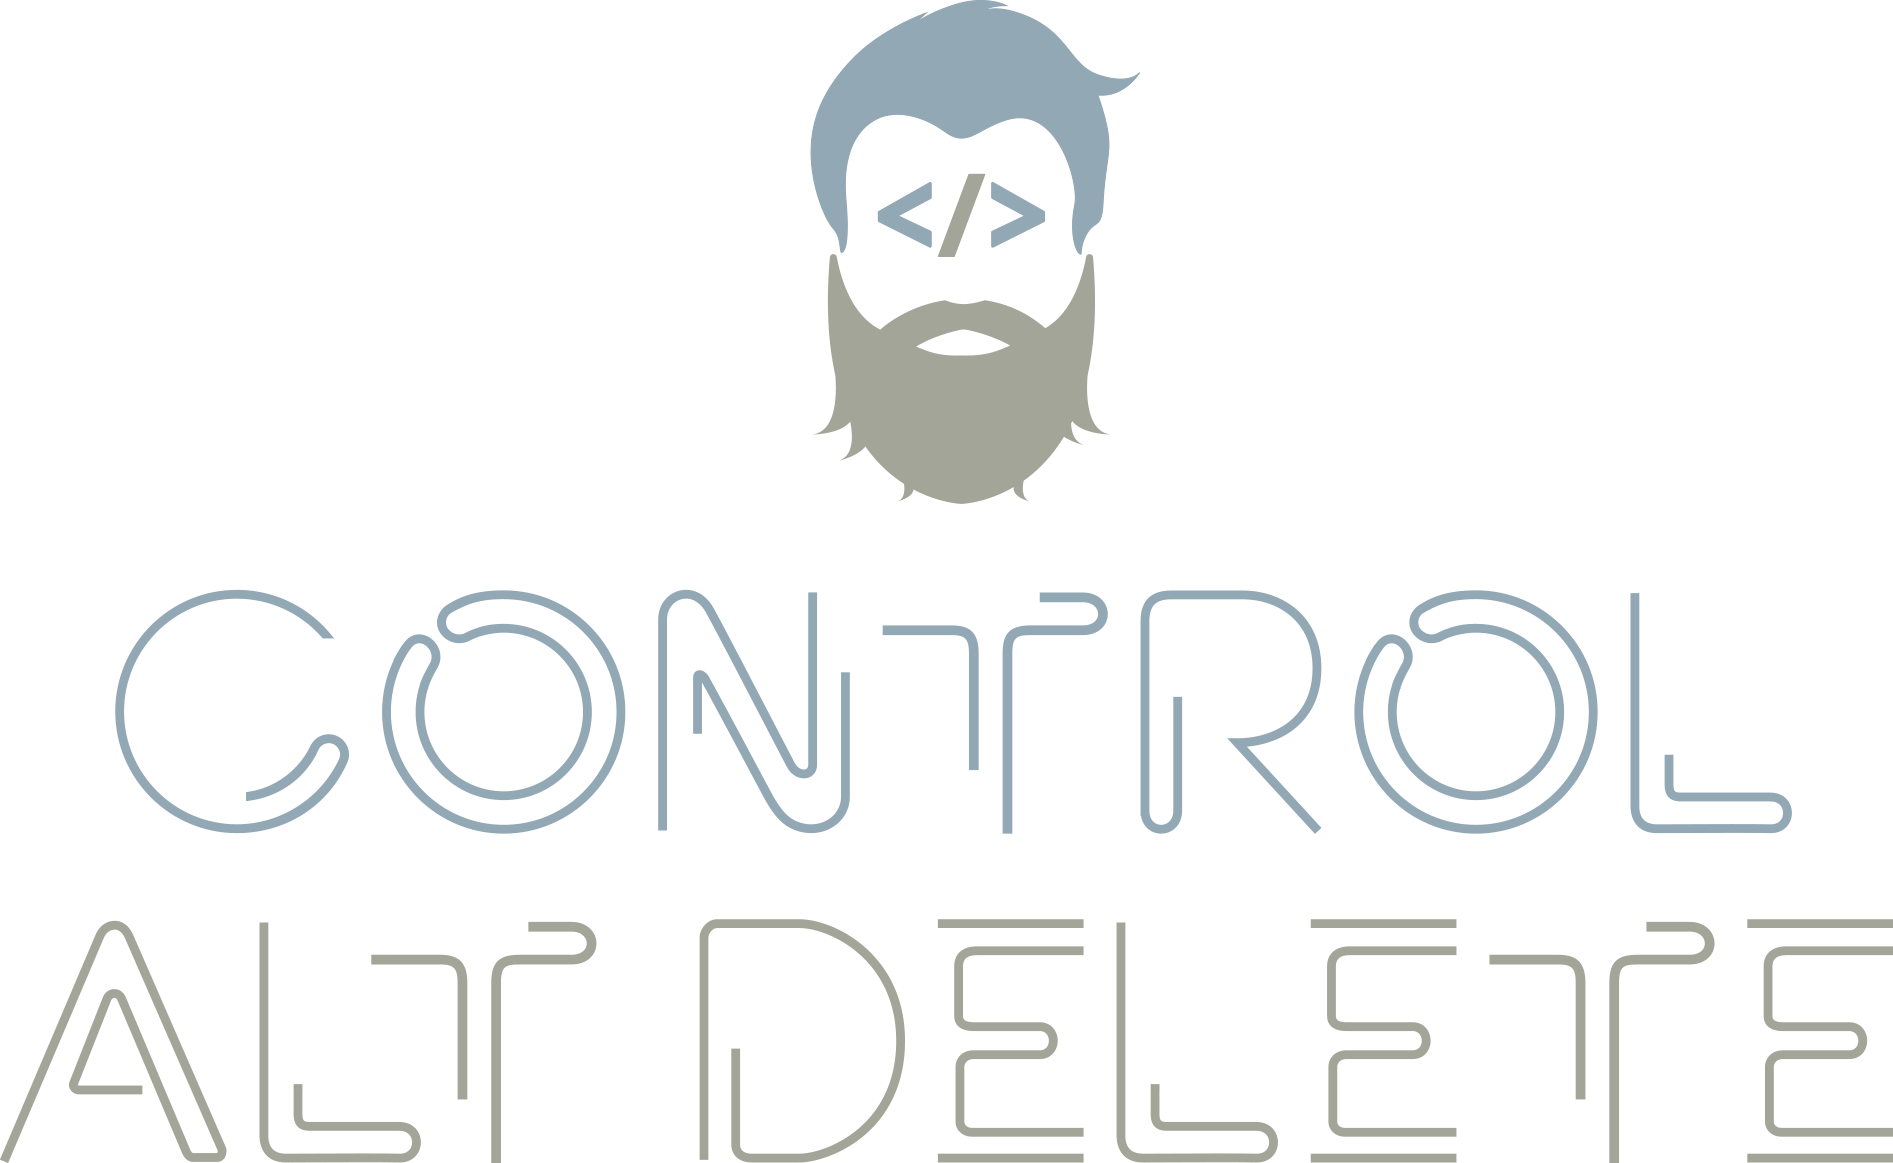 Control Alt Delete logo